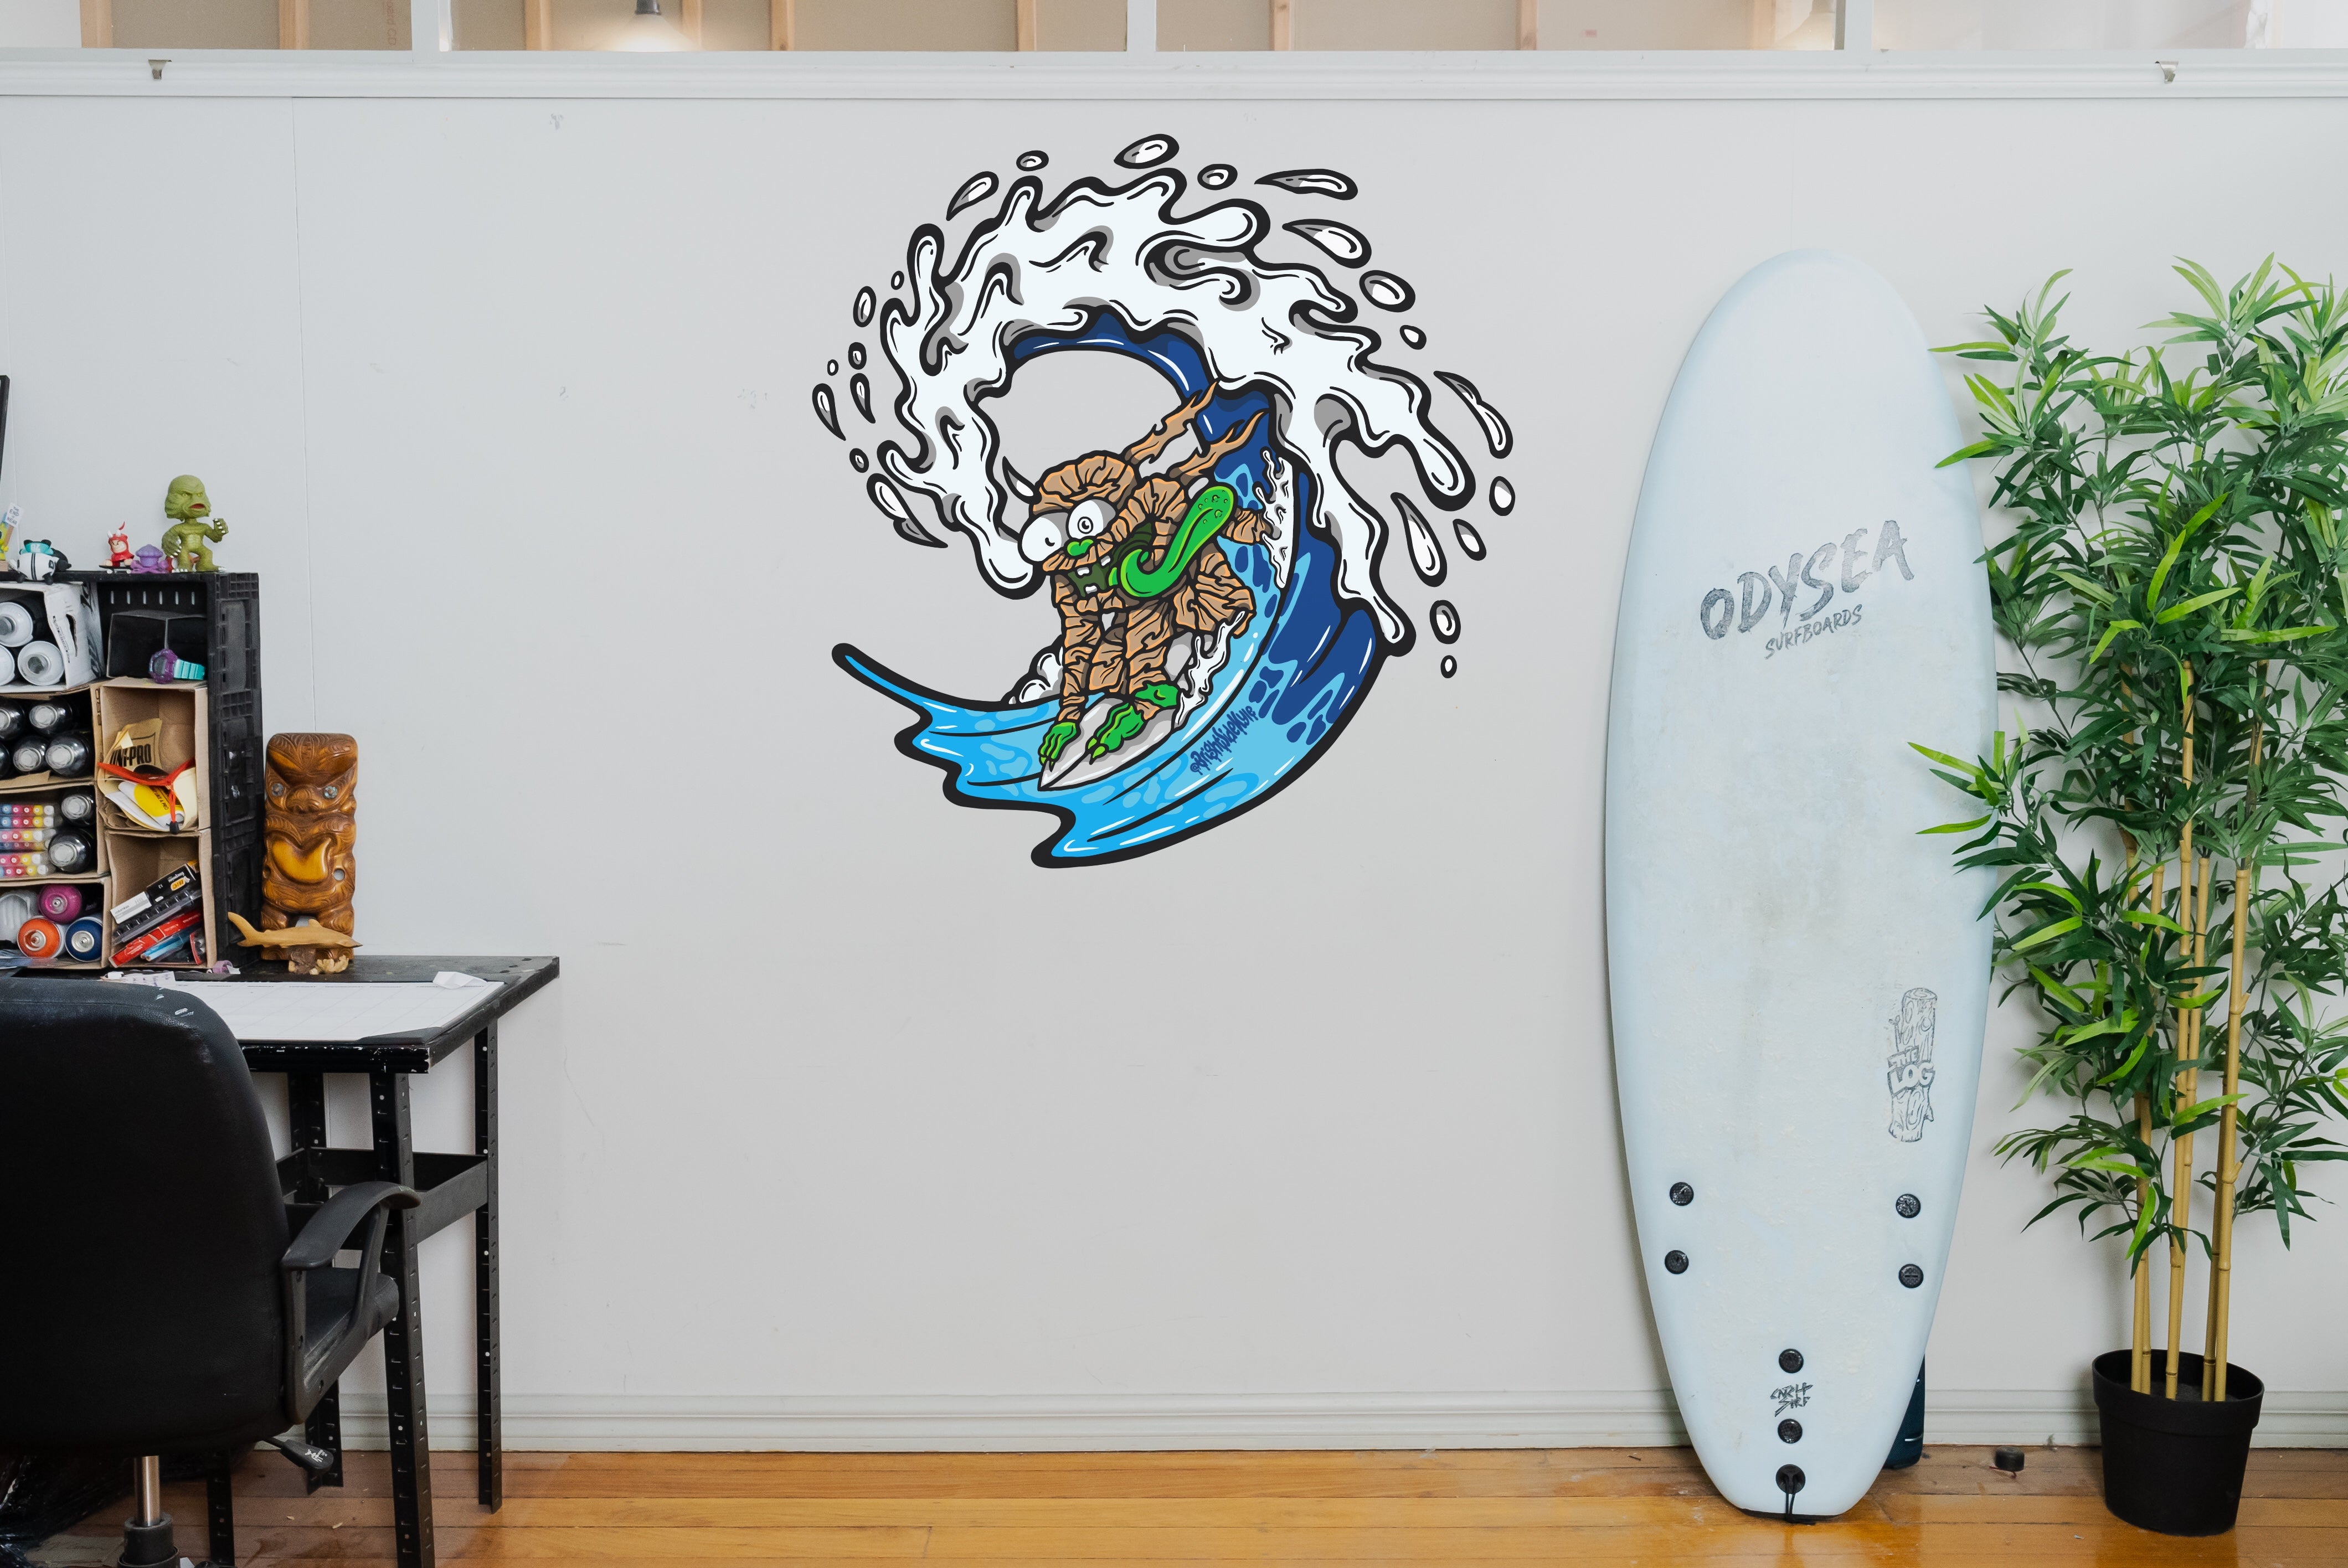 Wall Art Decal - Lil' Monster Surfs Up